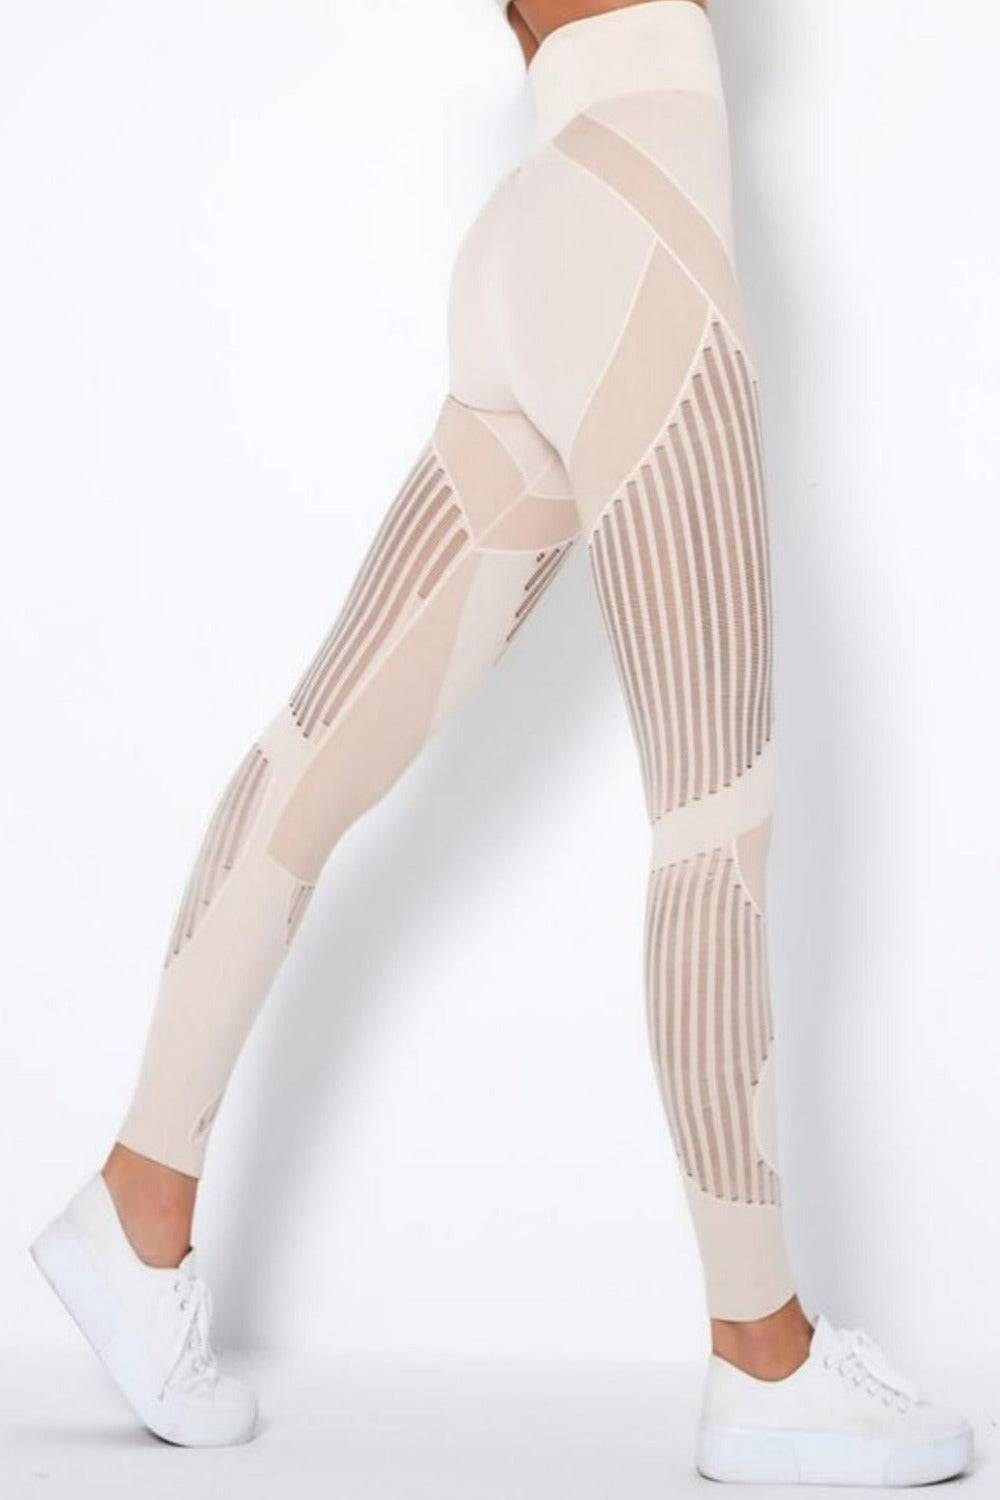 Tummy Control High Waist Seamless Sport Yoga Pants Leggings - TGC Boutique - Yoga Leggings